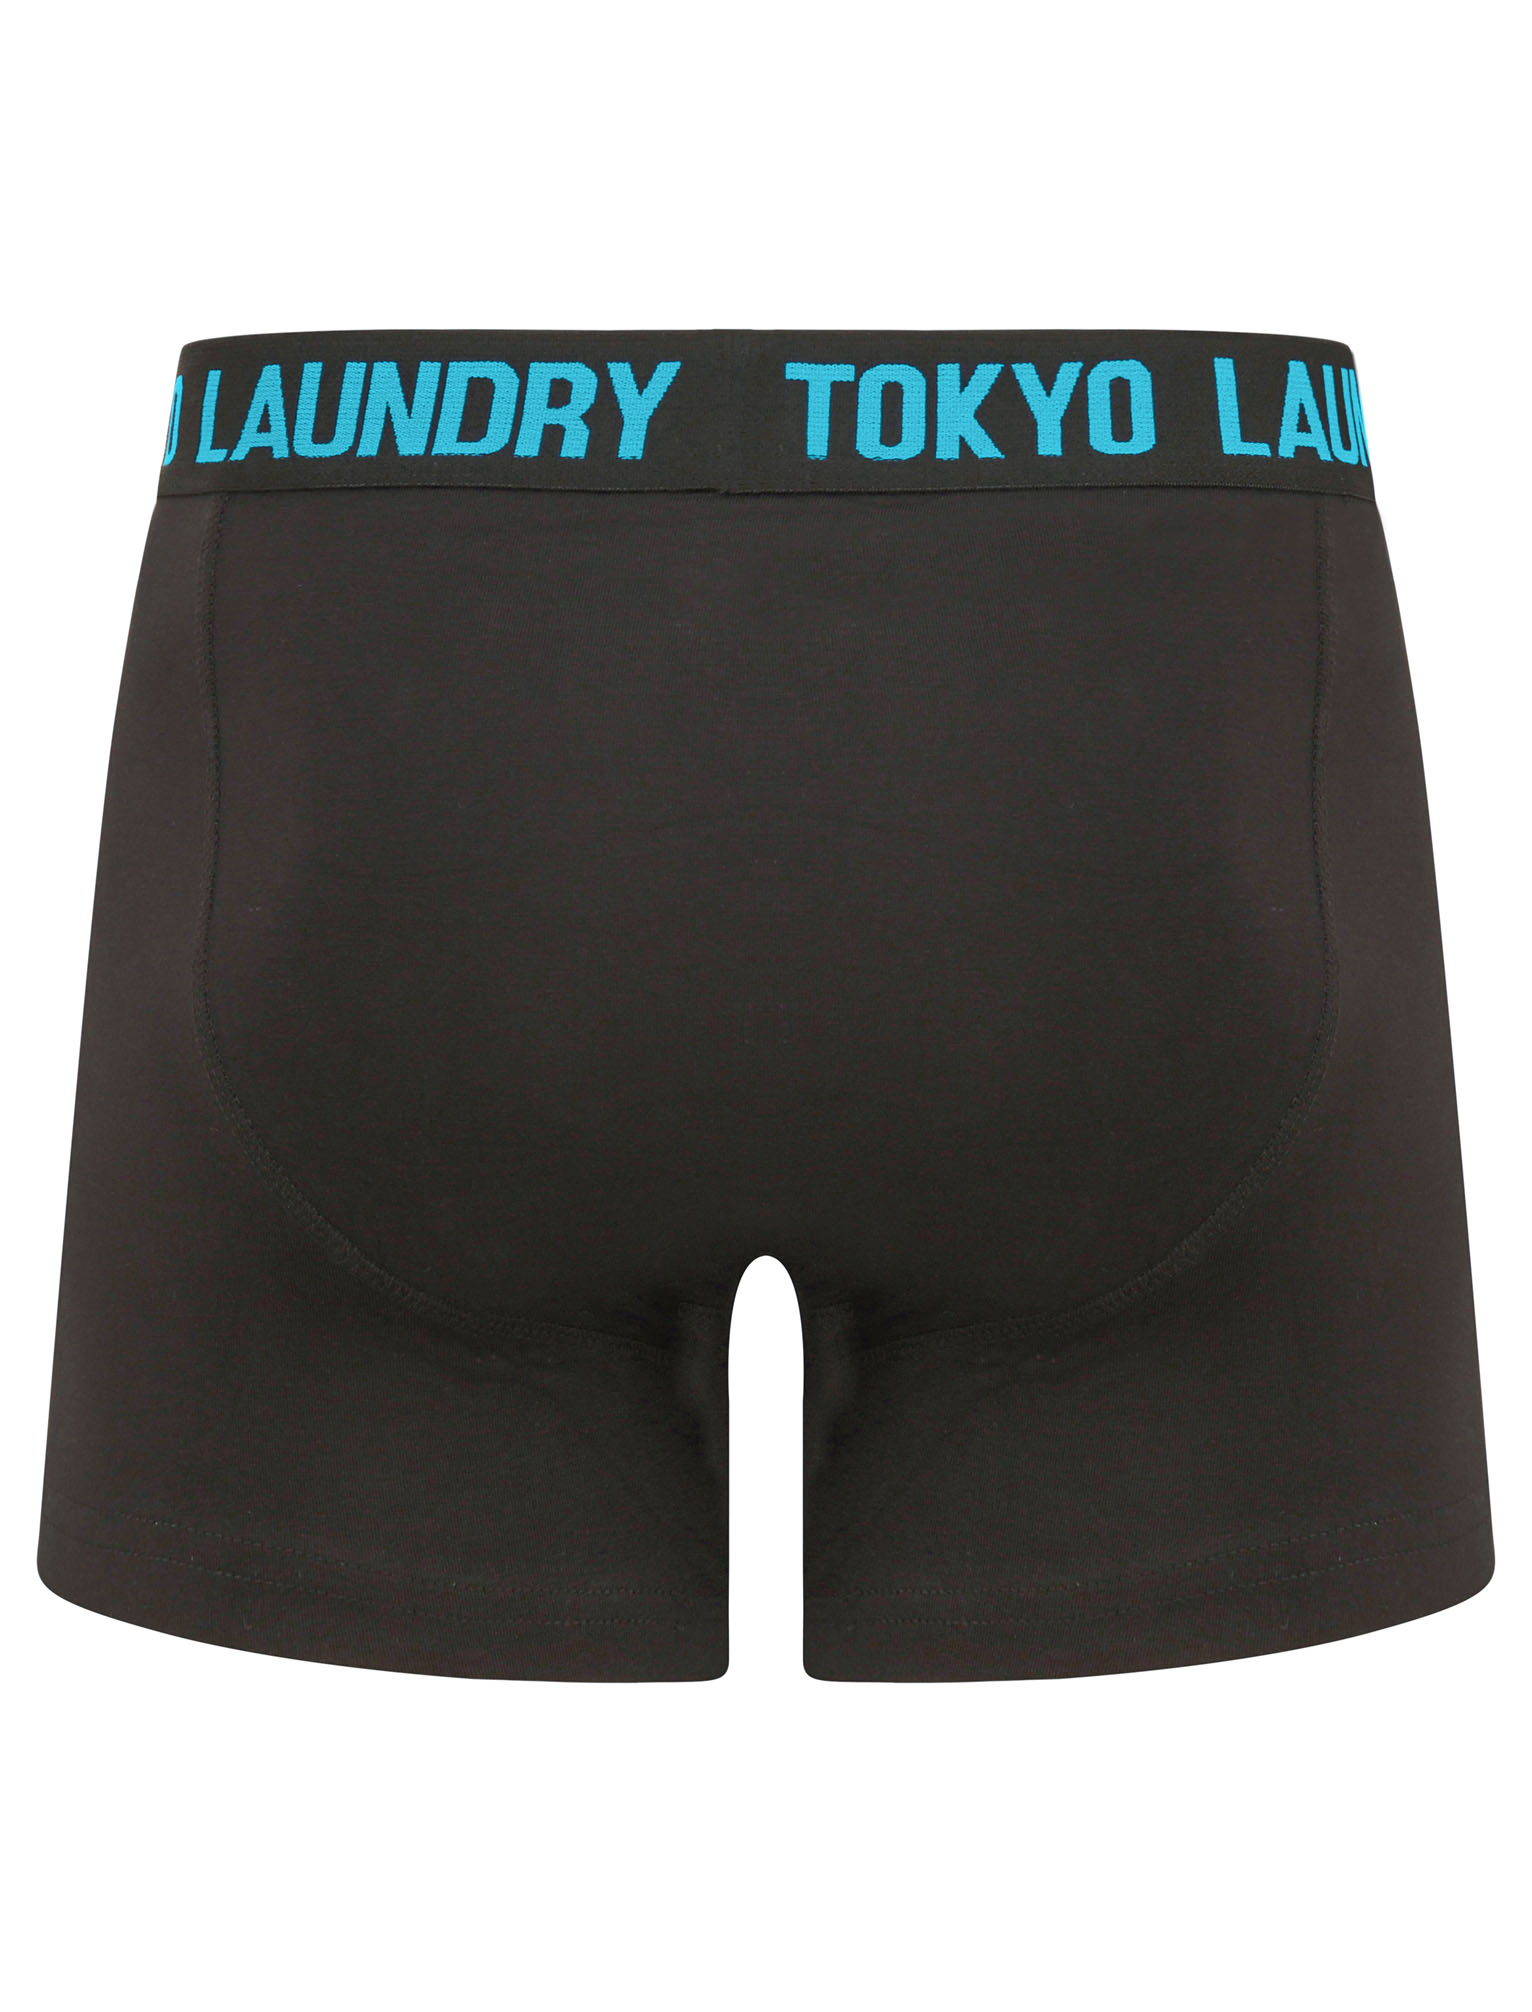 Tokyo Laundry Men's Booker Two Pack Boxer Shorts Set Black Boxers ...